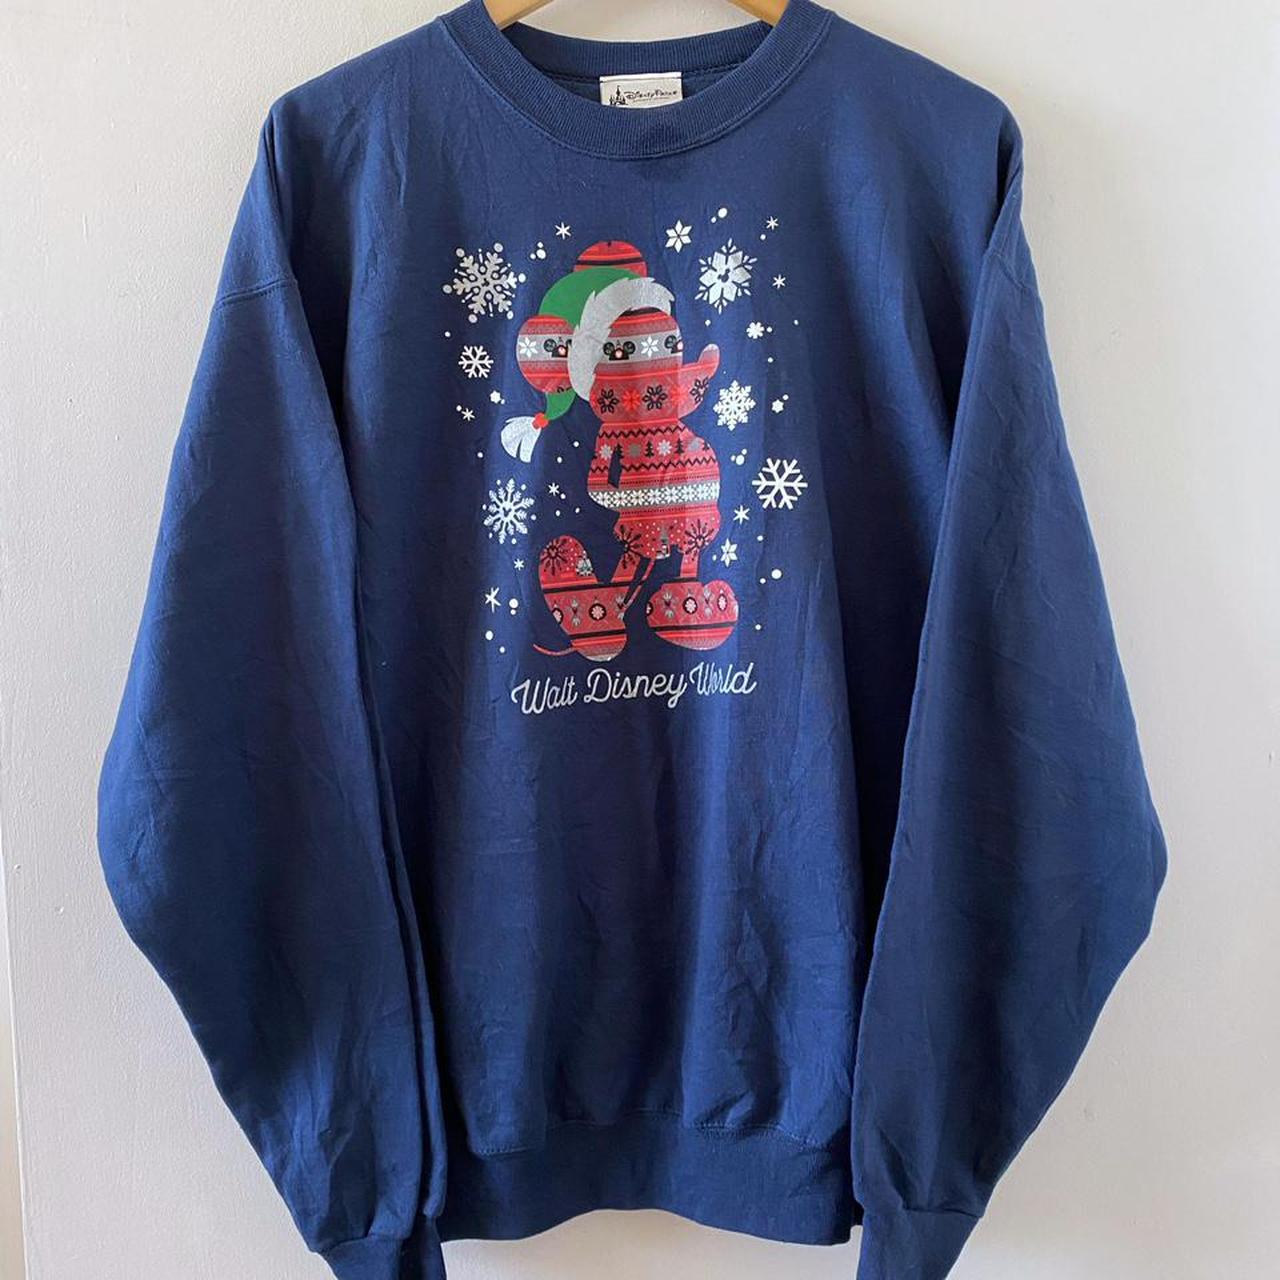 Product Image 1 - Disney world Christmas sweatshirt NEW